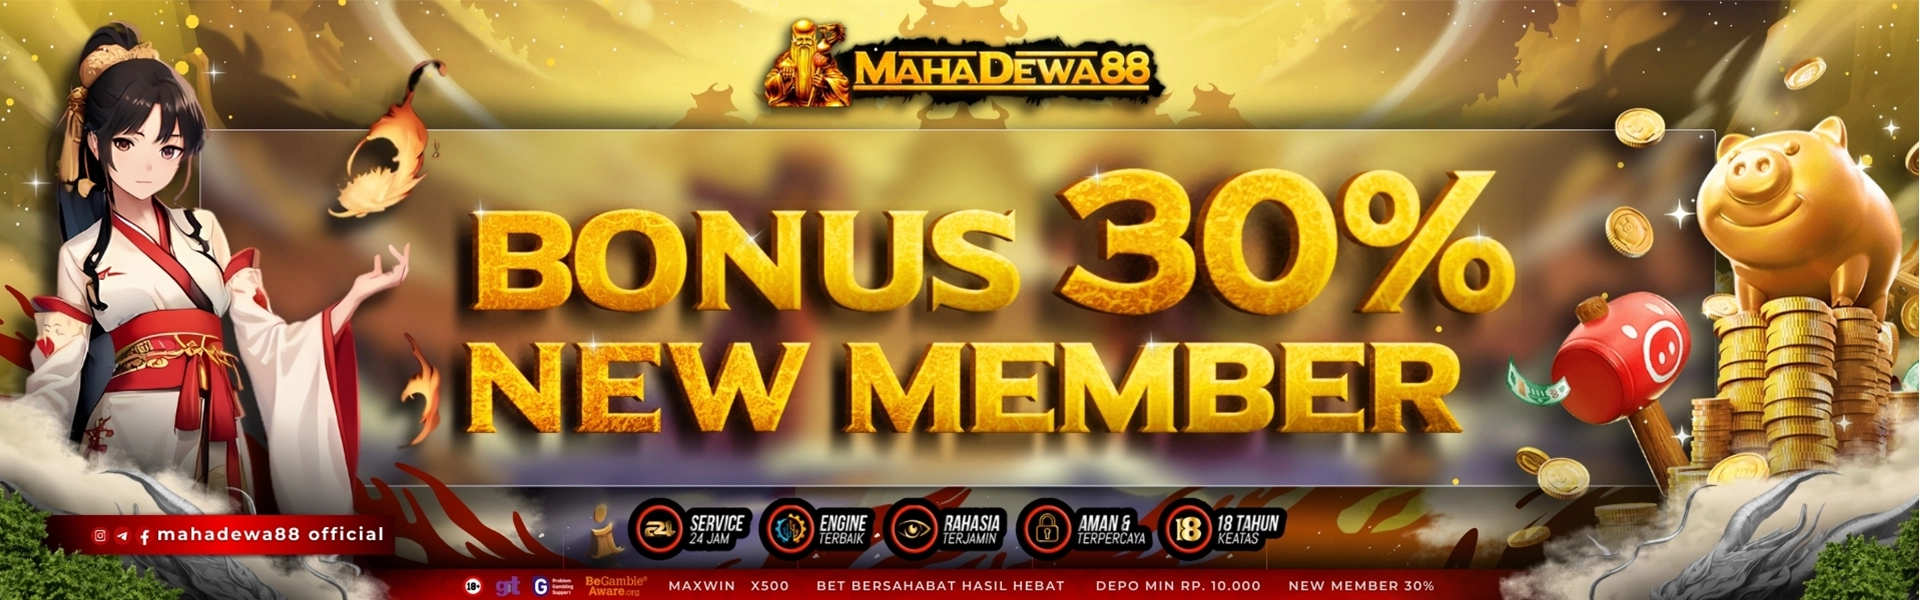 bonus new member 30%